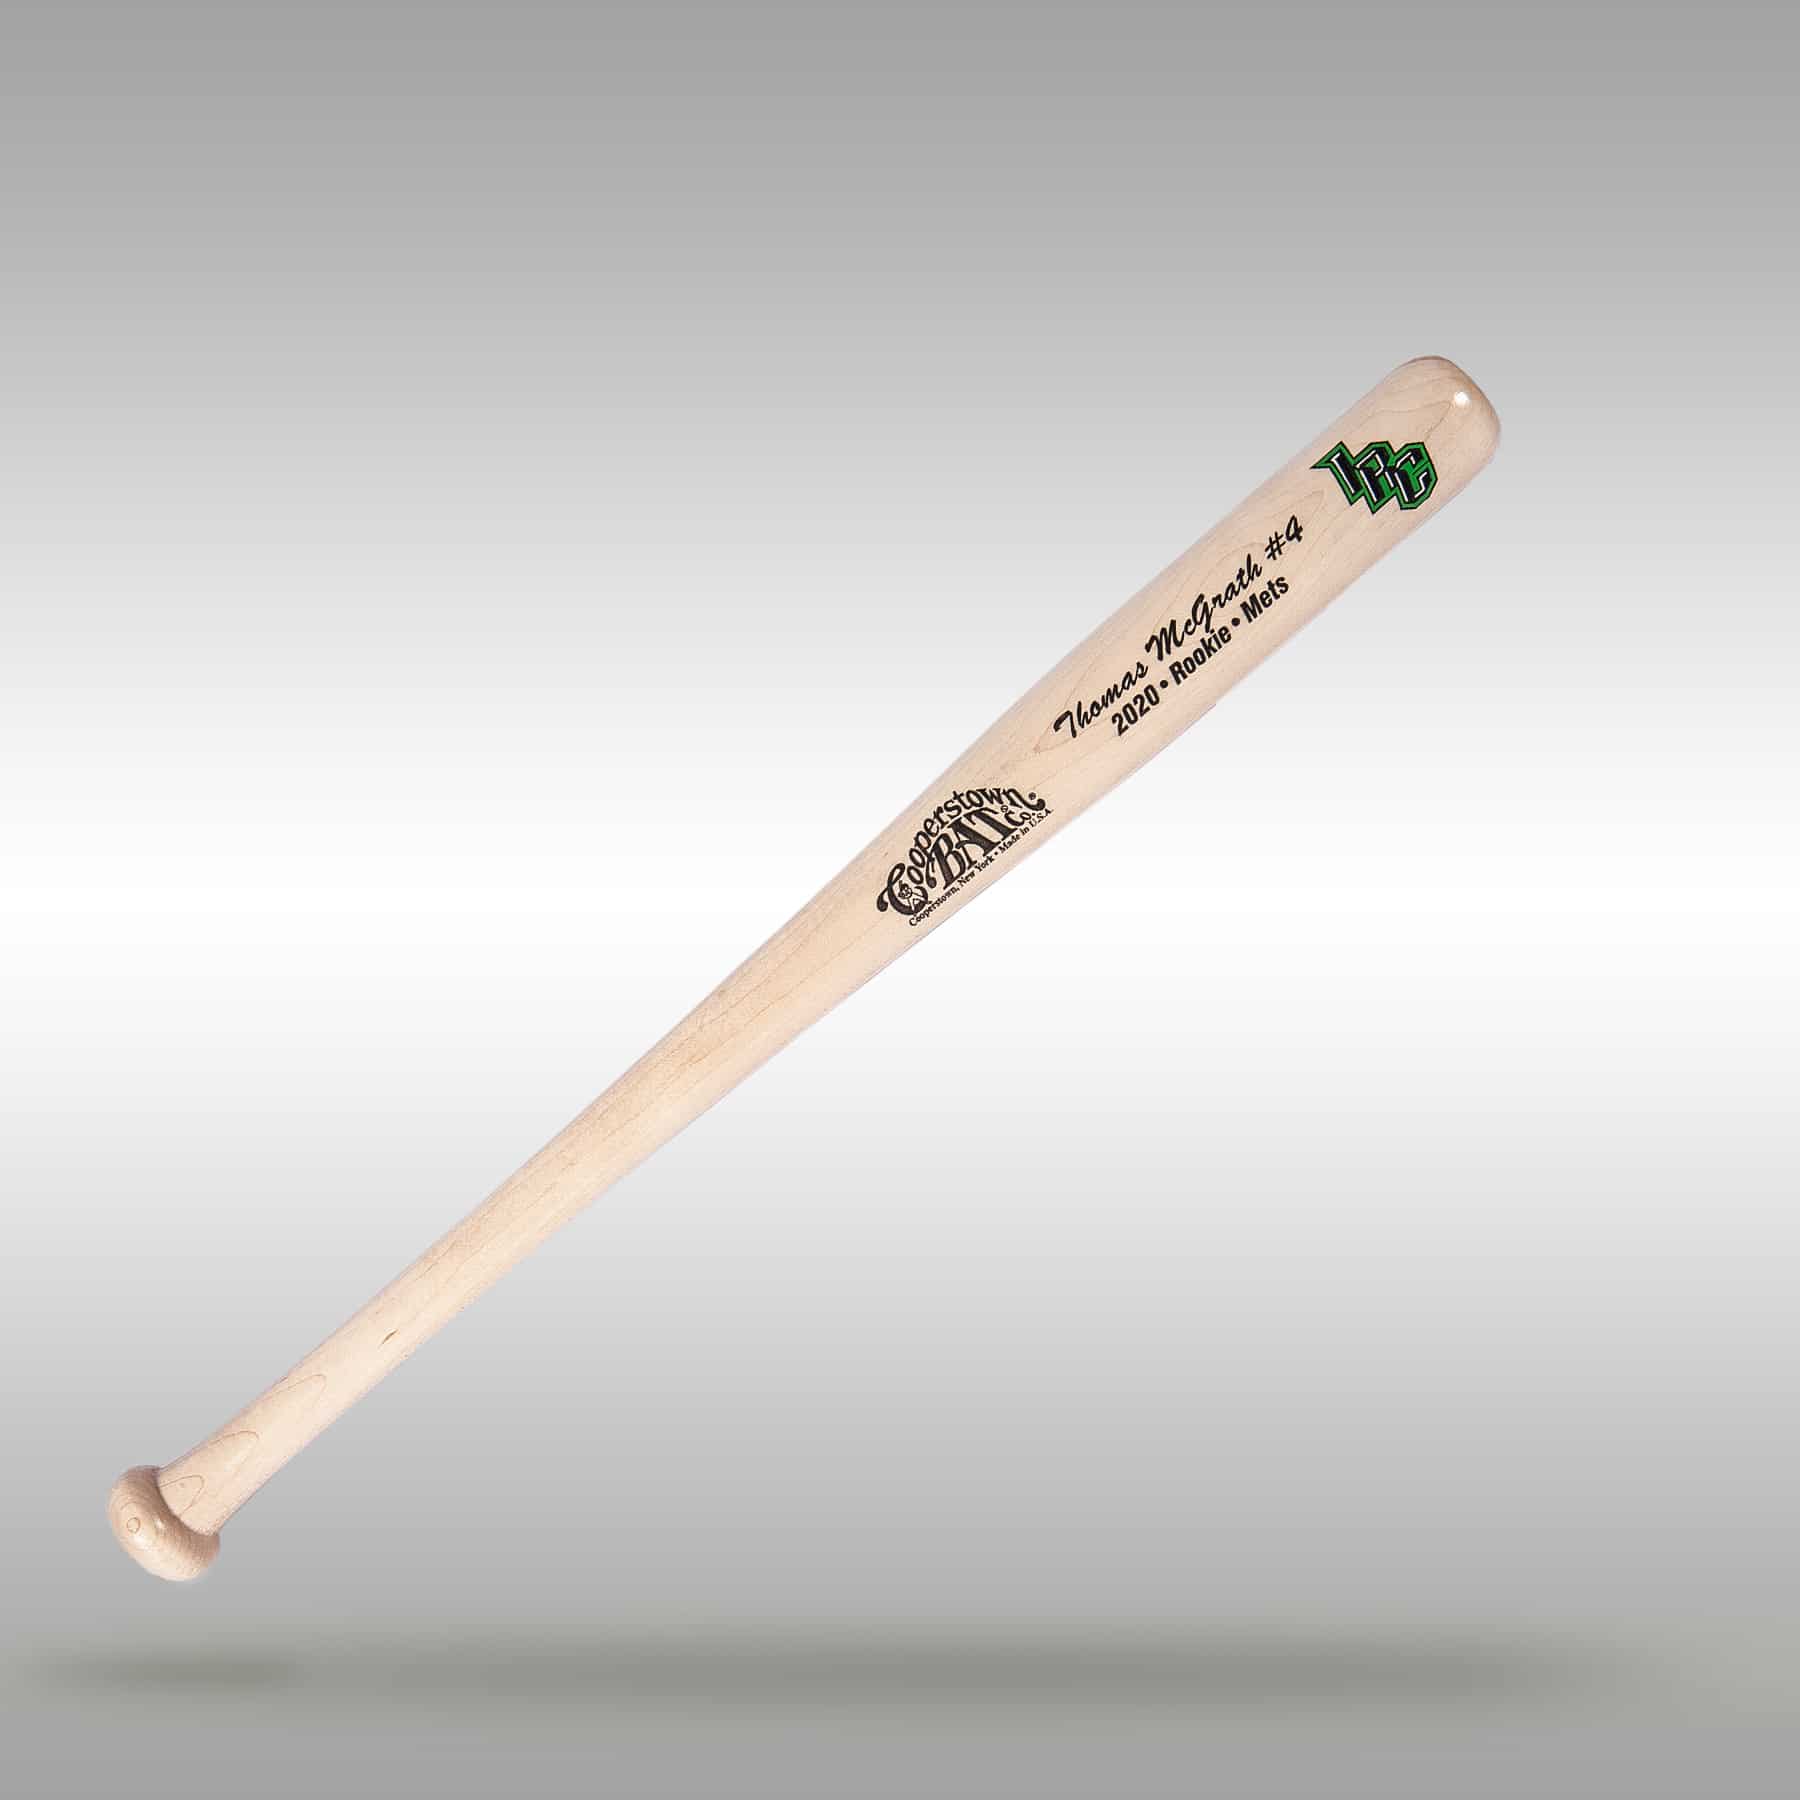 How long does it take to get a custom louisville slugger bat?